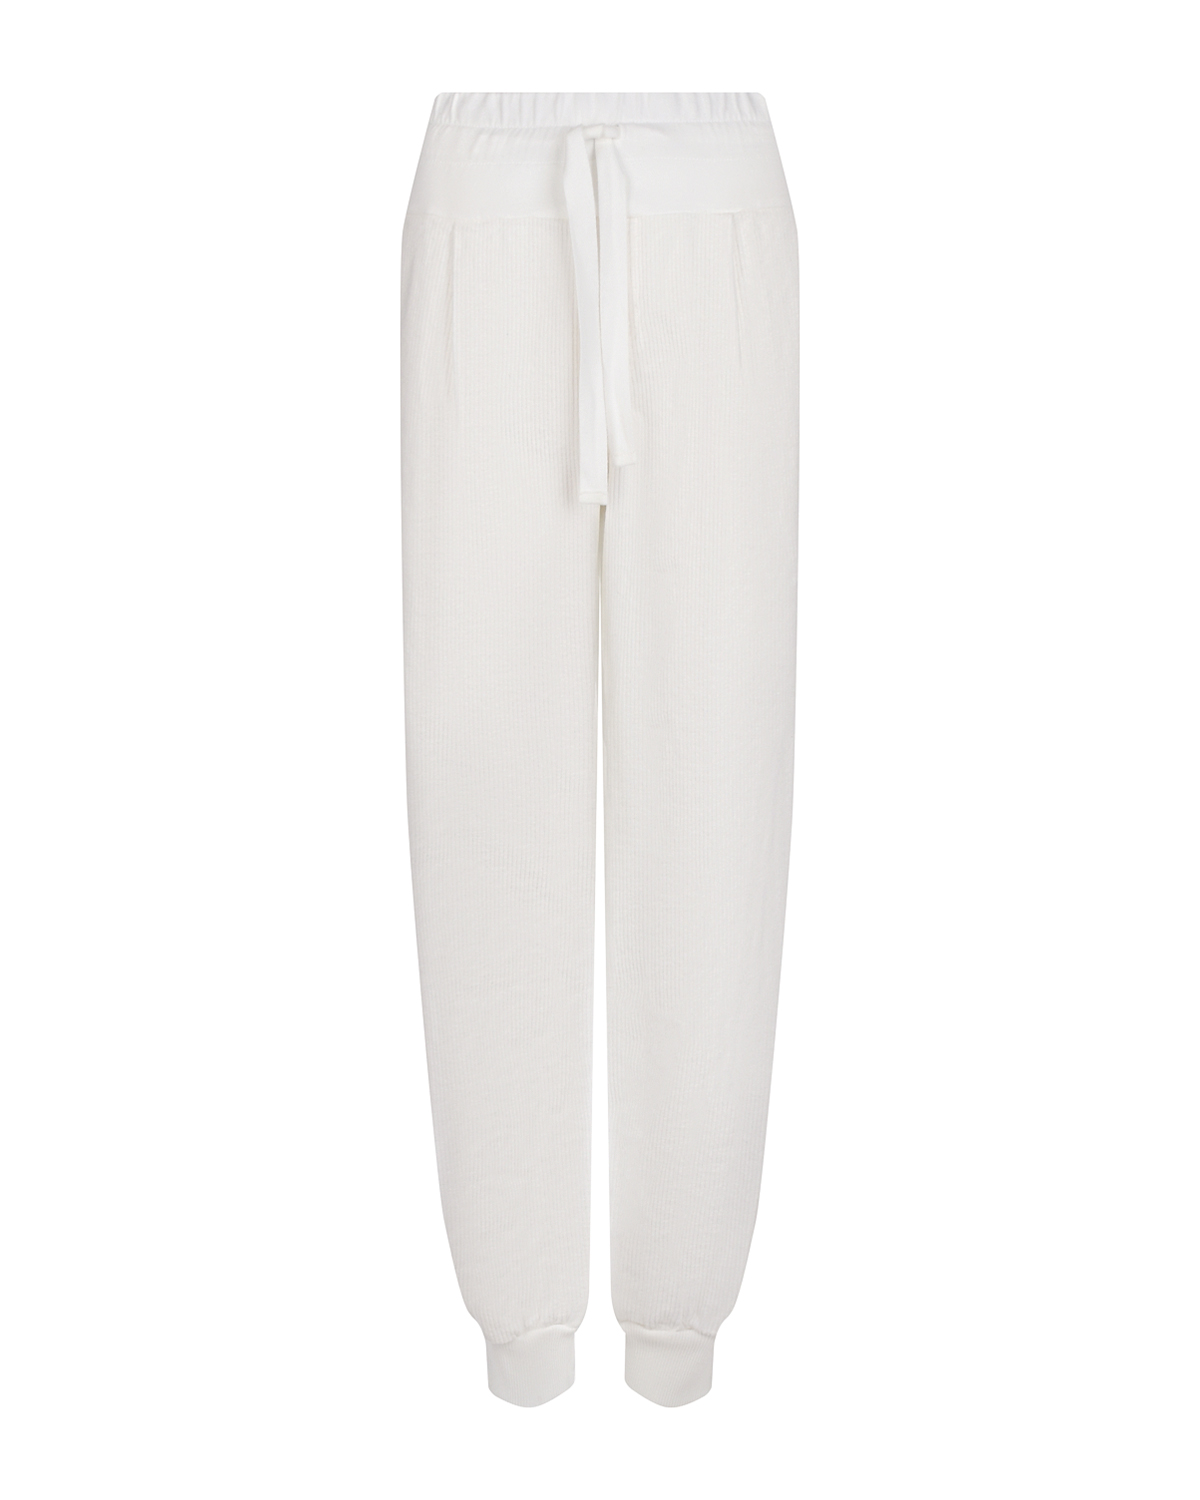 Белые джоггеры Deha, размер 42, цвет белый - фото 1